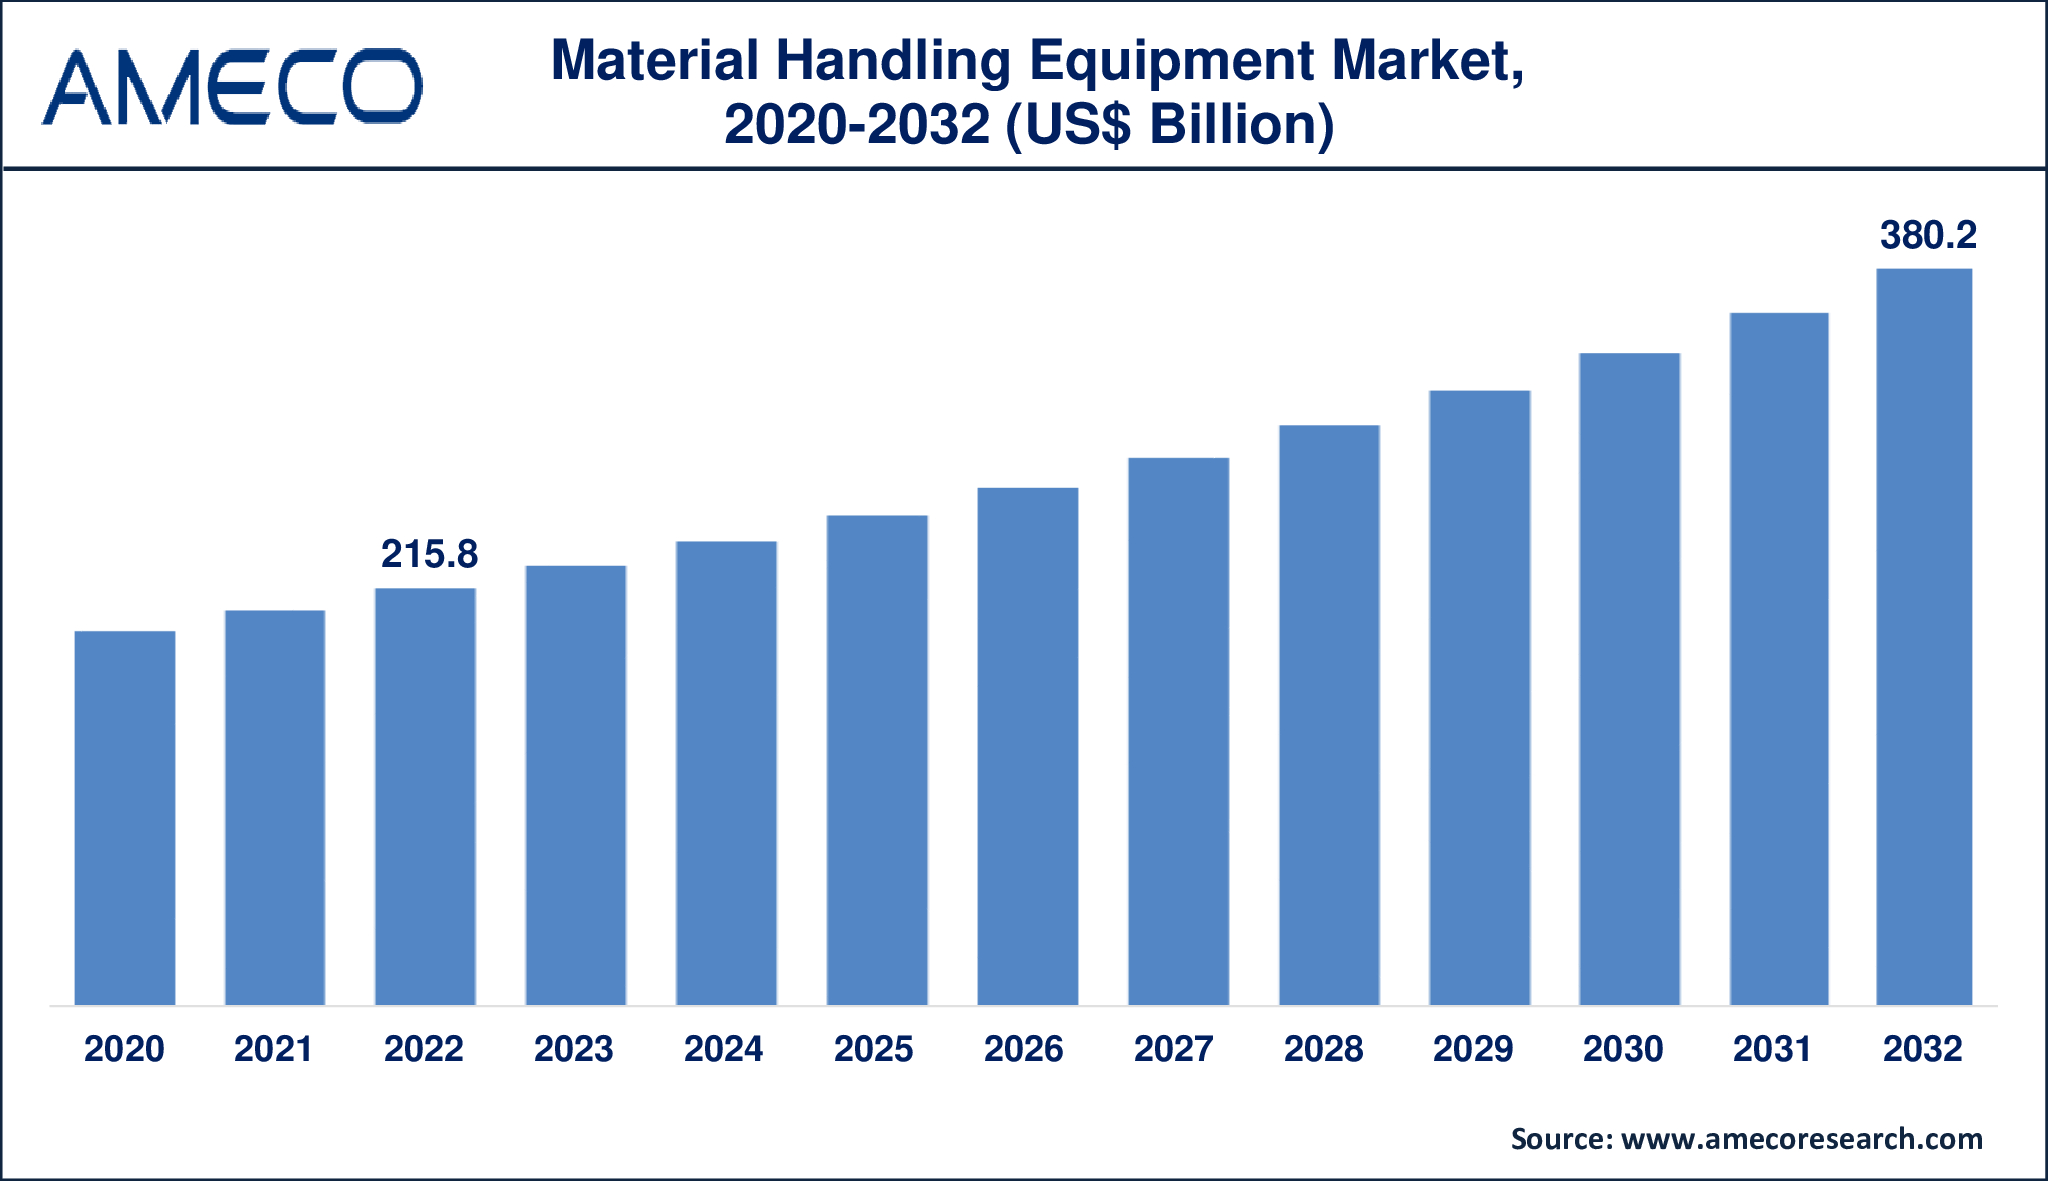 Material Handling Equipment Market Dynamics